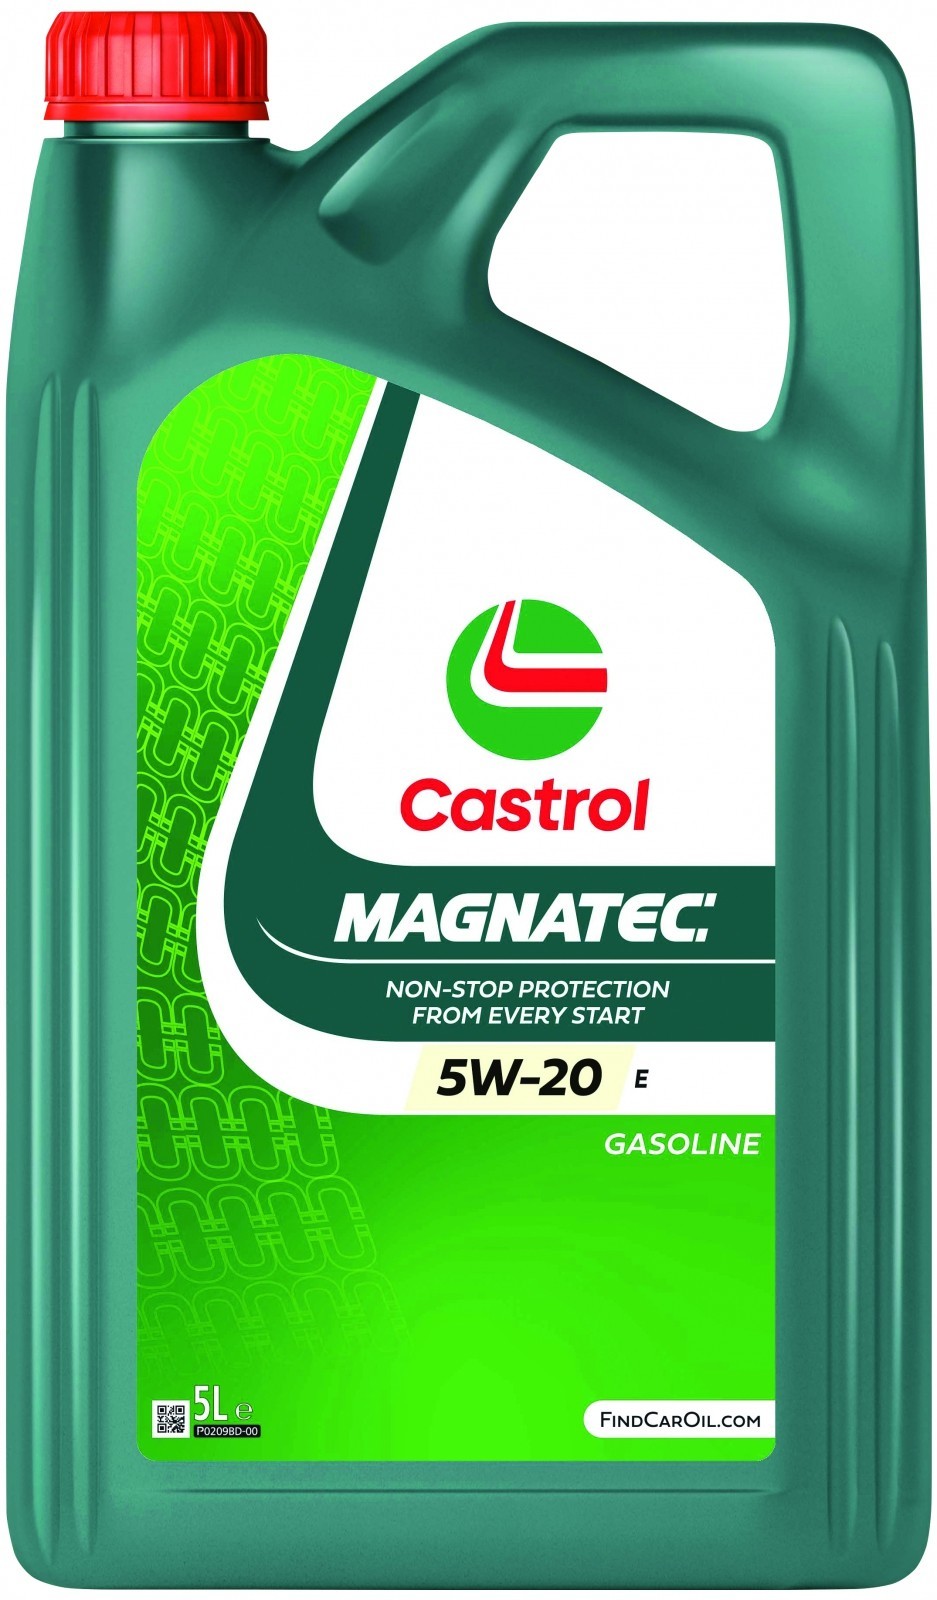 CASTROL 5W-20 E Magnatec Dualock Stop Start (5 L) Synthetiköl 5 L (15CC47)